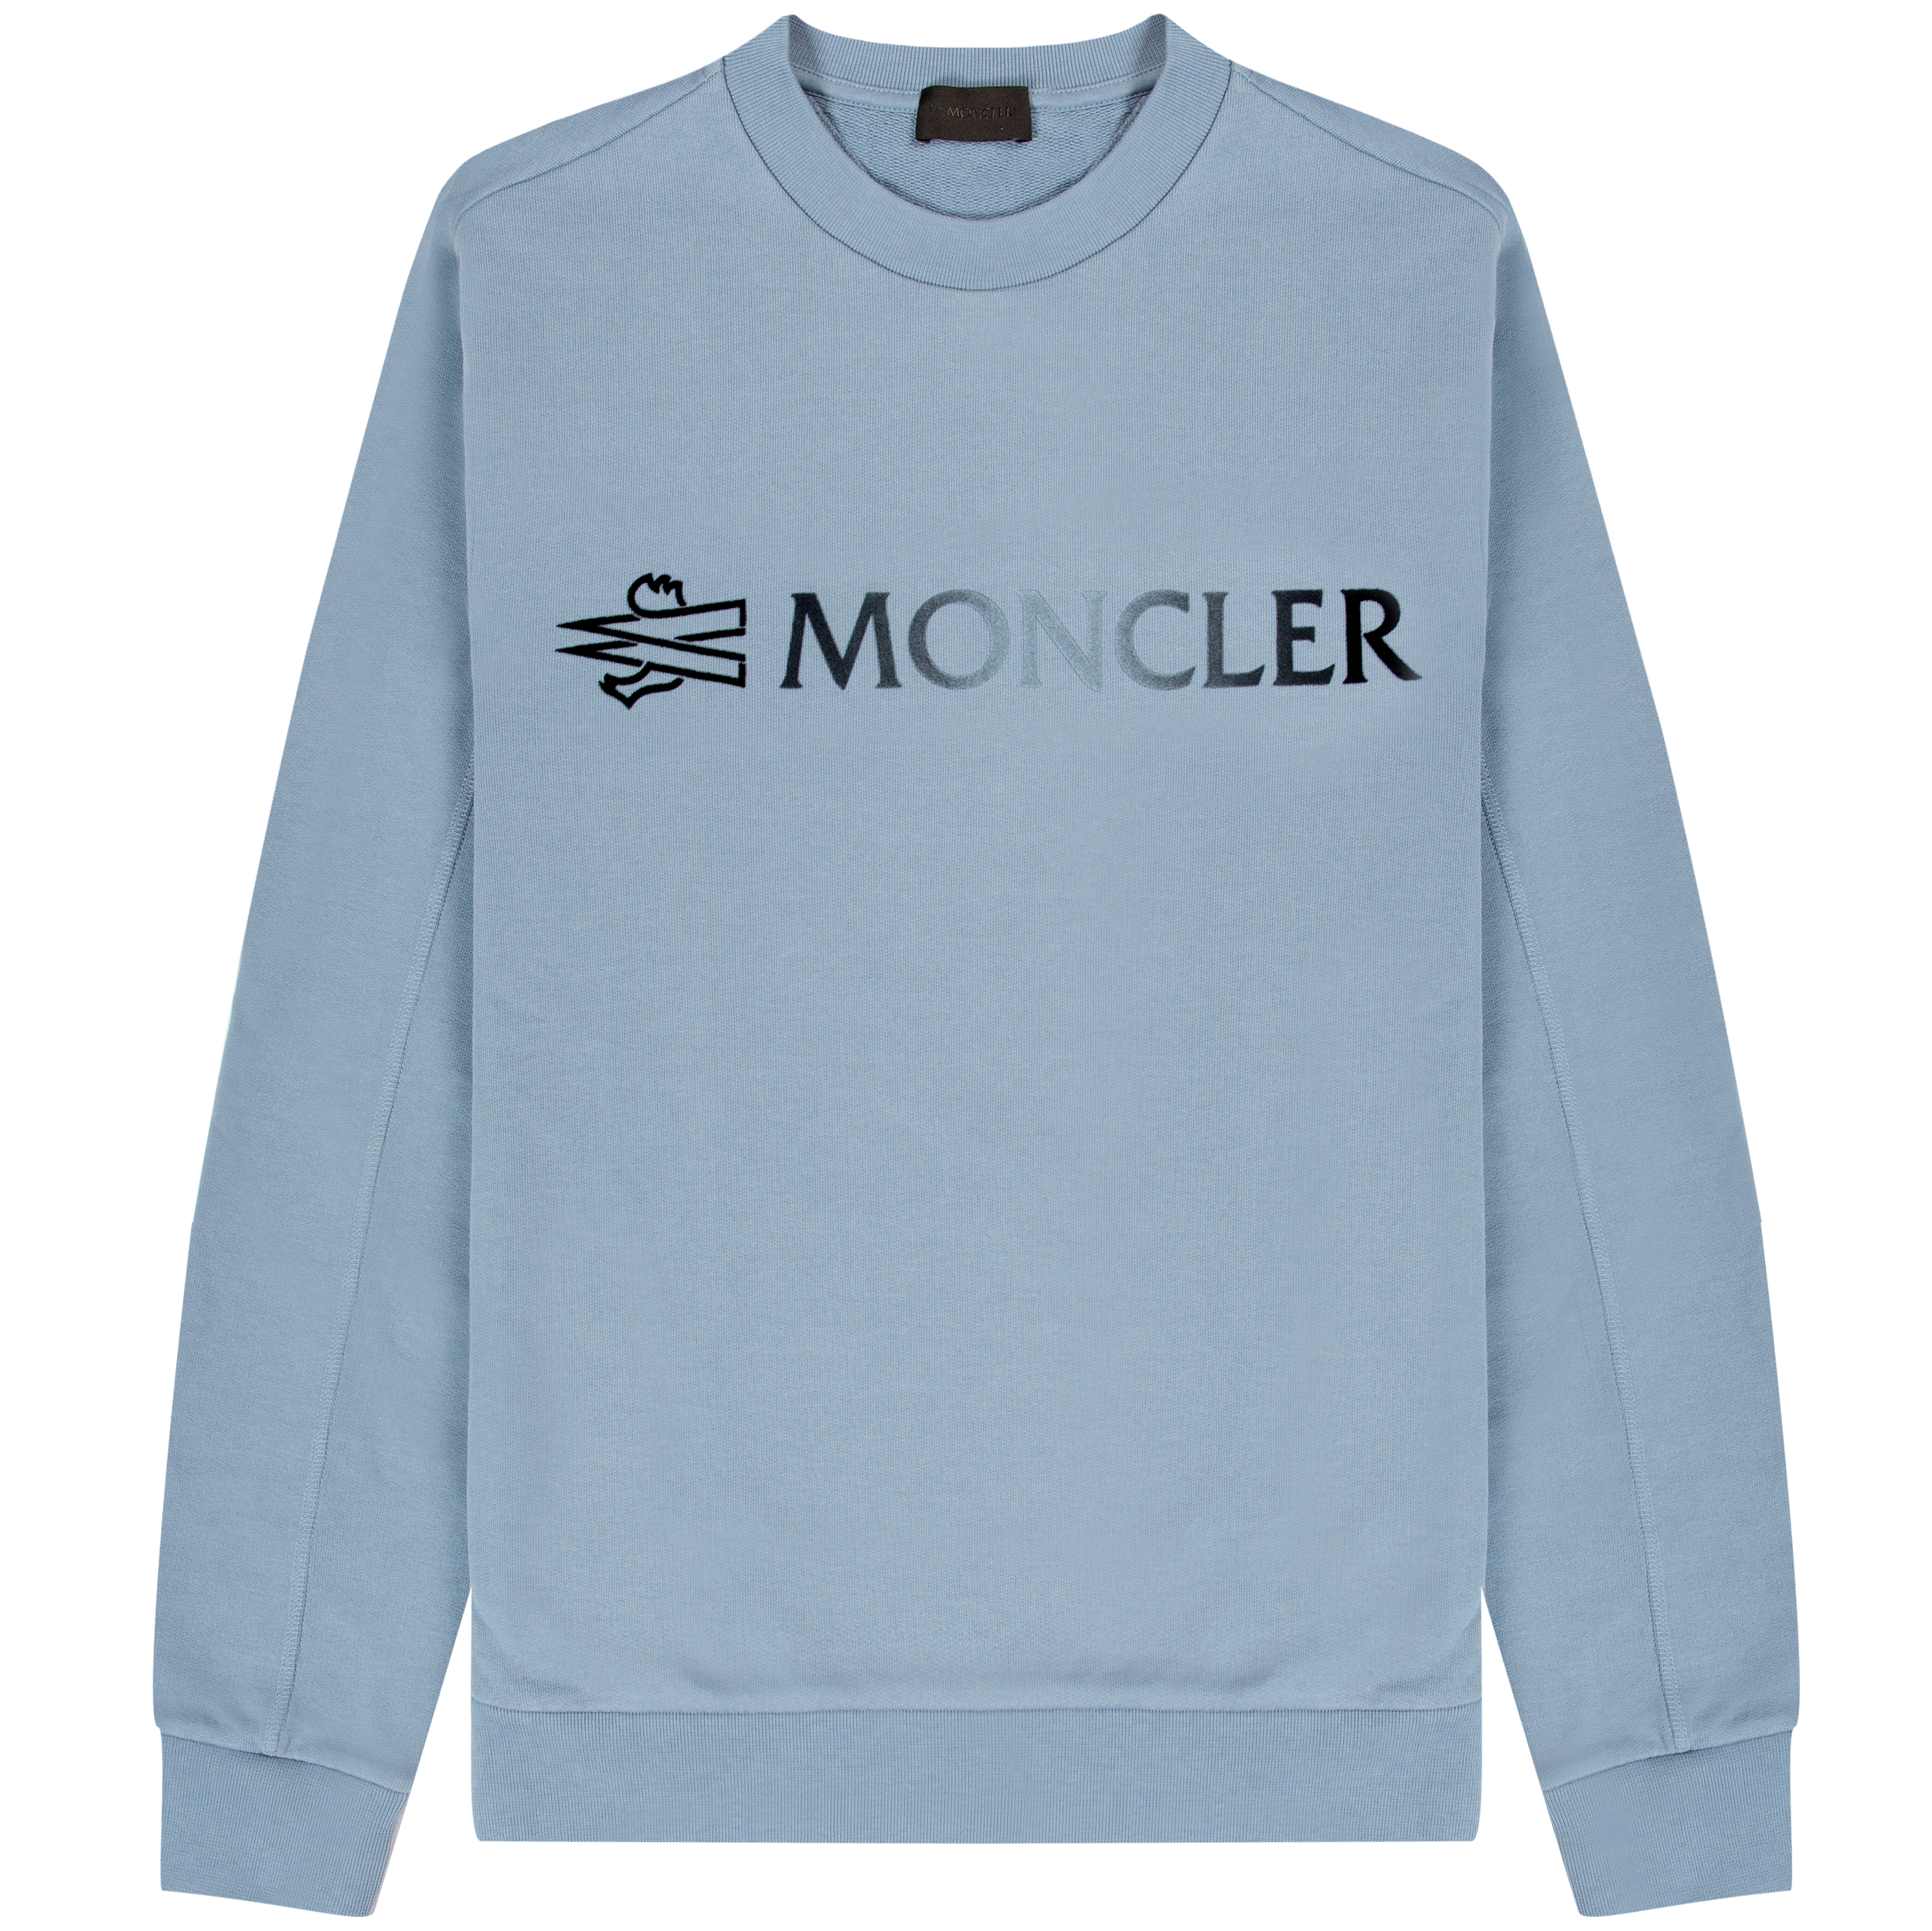 Moncler Matt Black Embellished Felt Logo Crewneck Sweatshirt Powder Blue